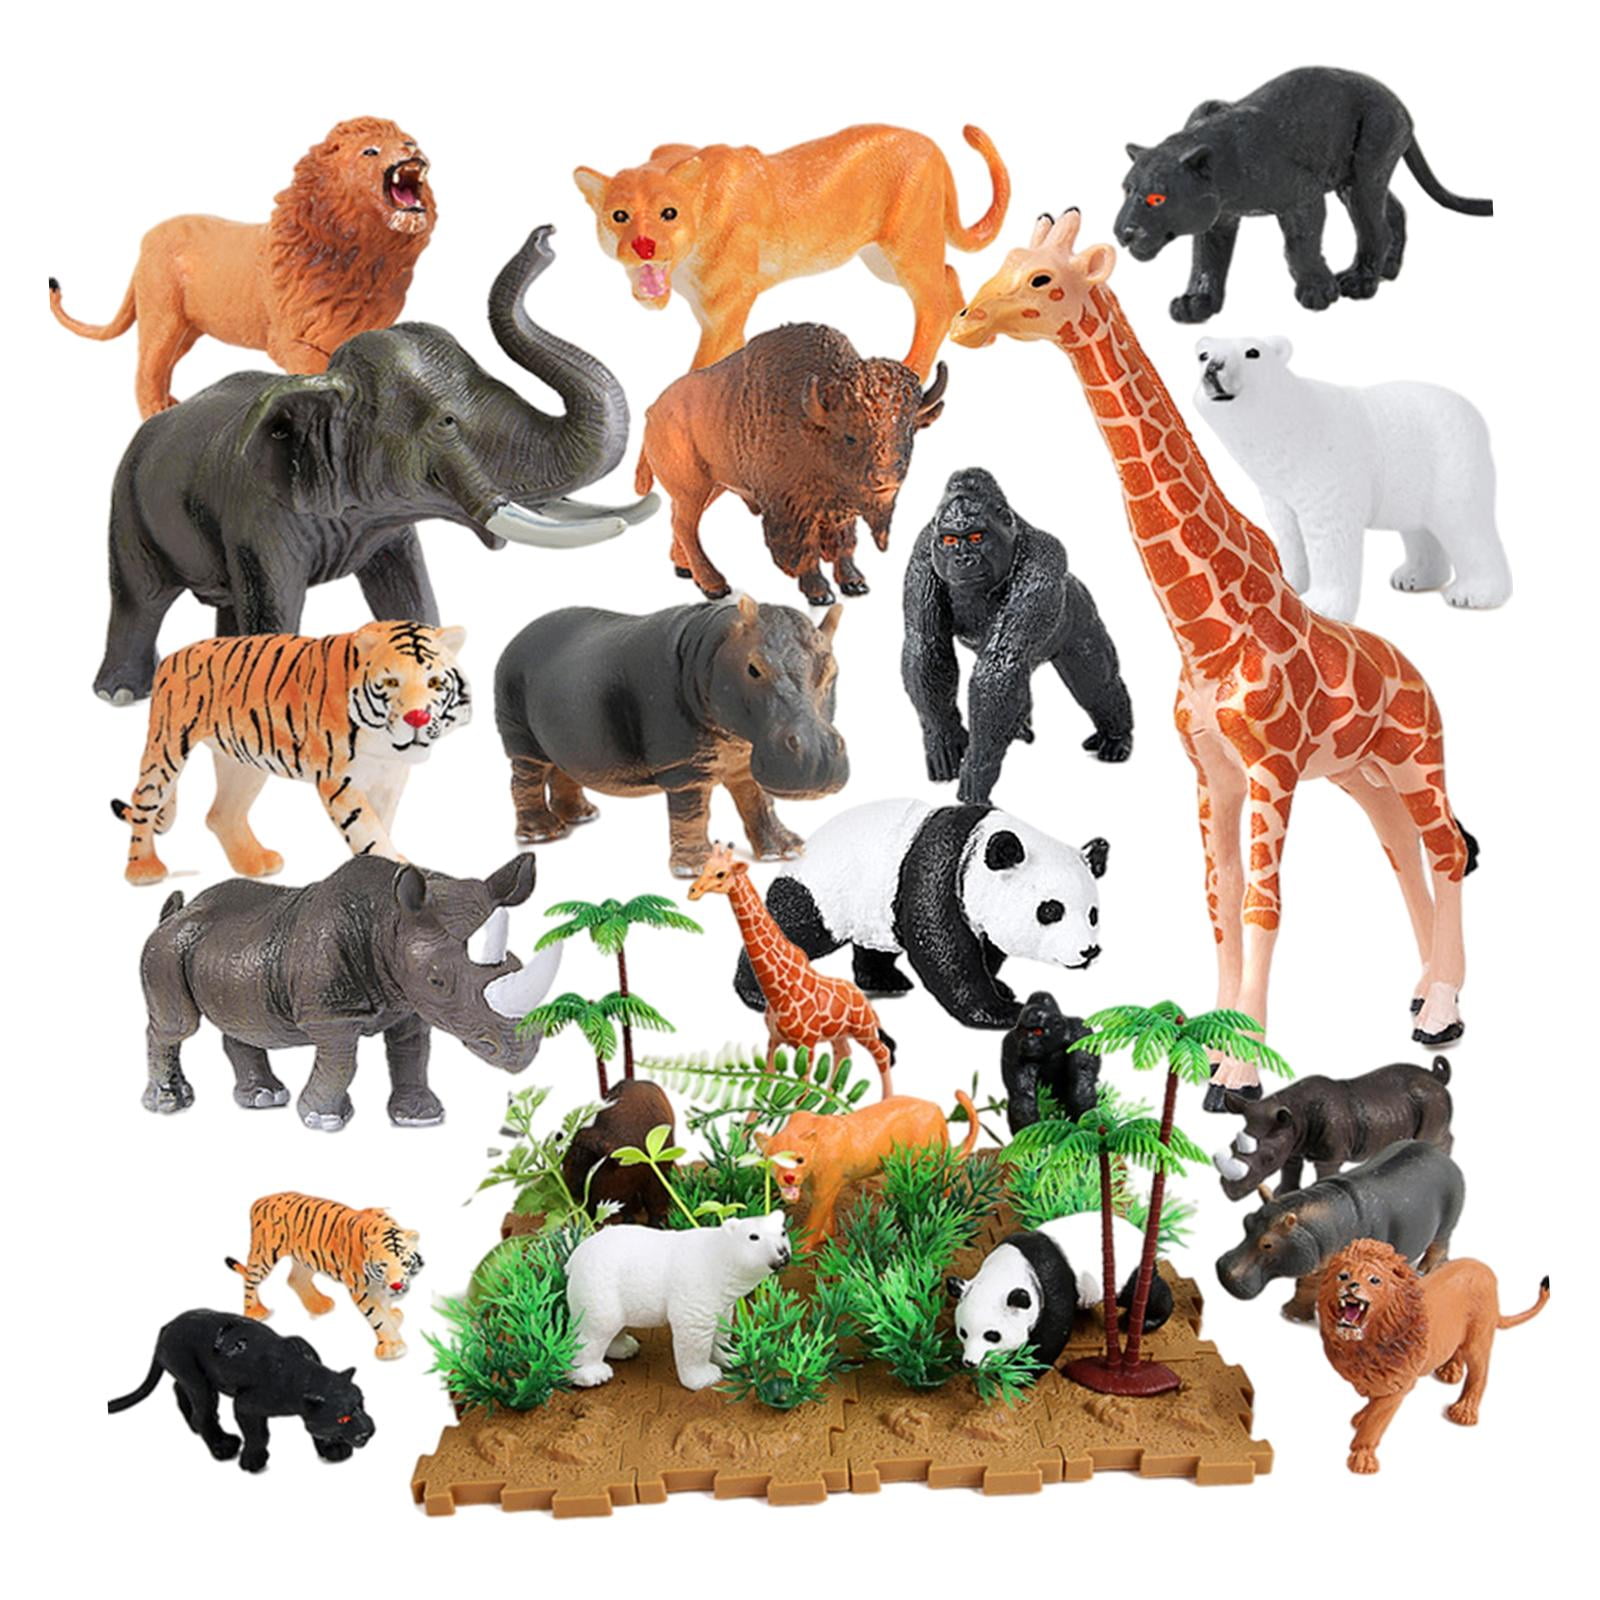 12pcs Mixed-color Plastic Kitten Cat Animal Models Figurine Kids Favor Toys 